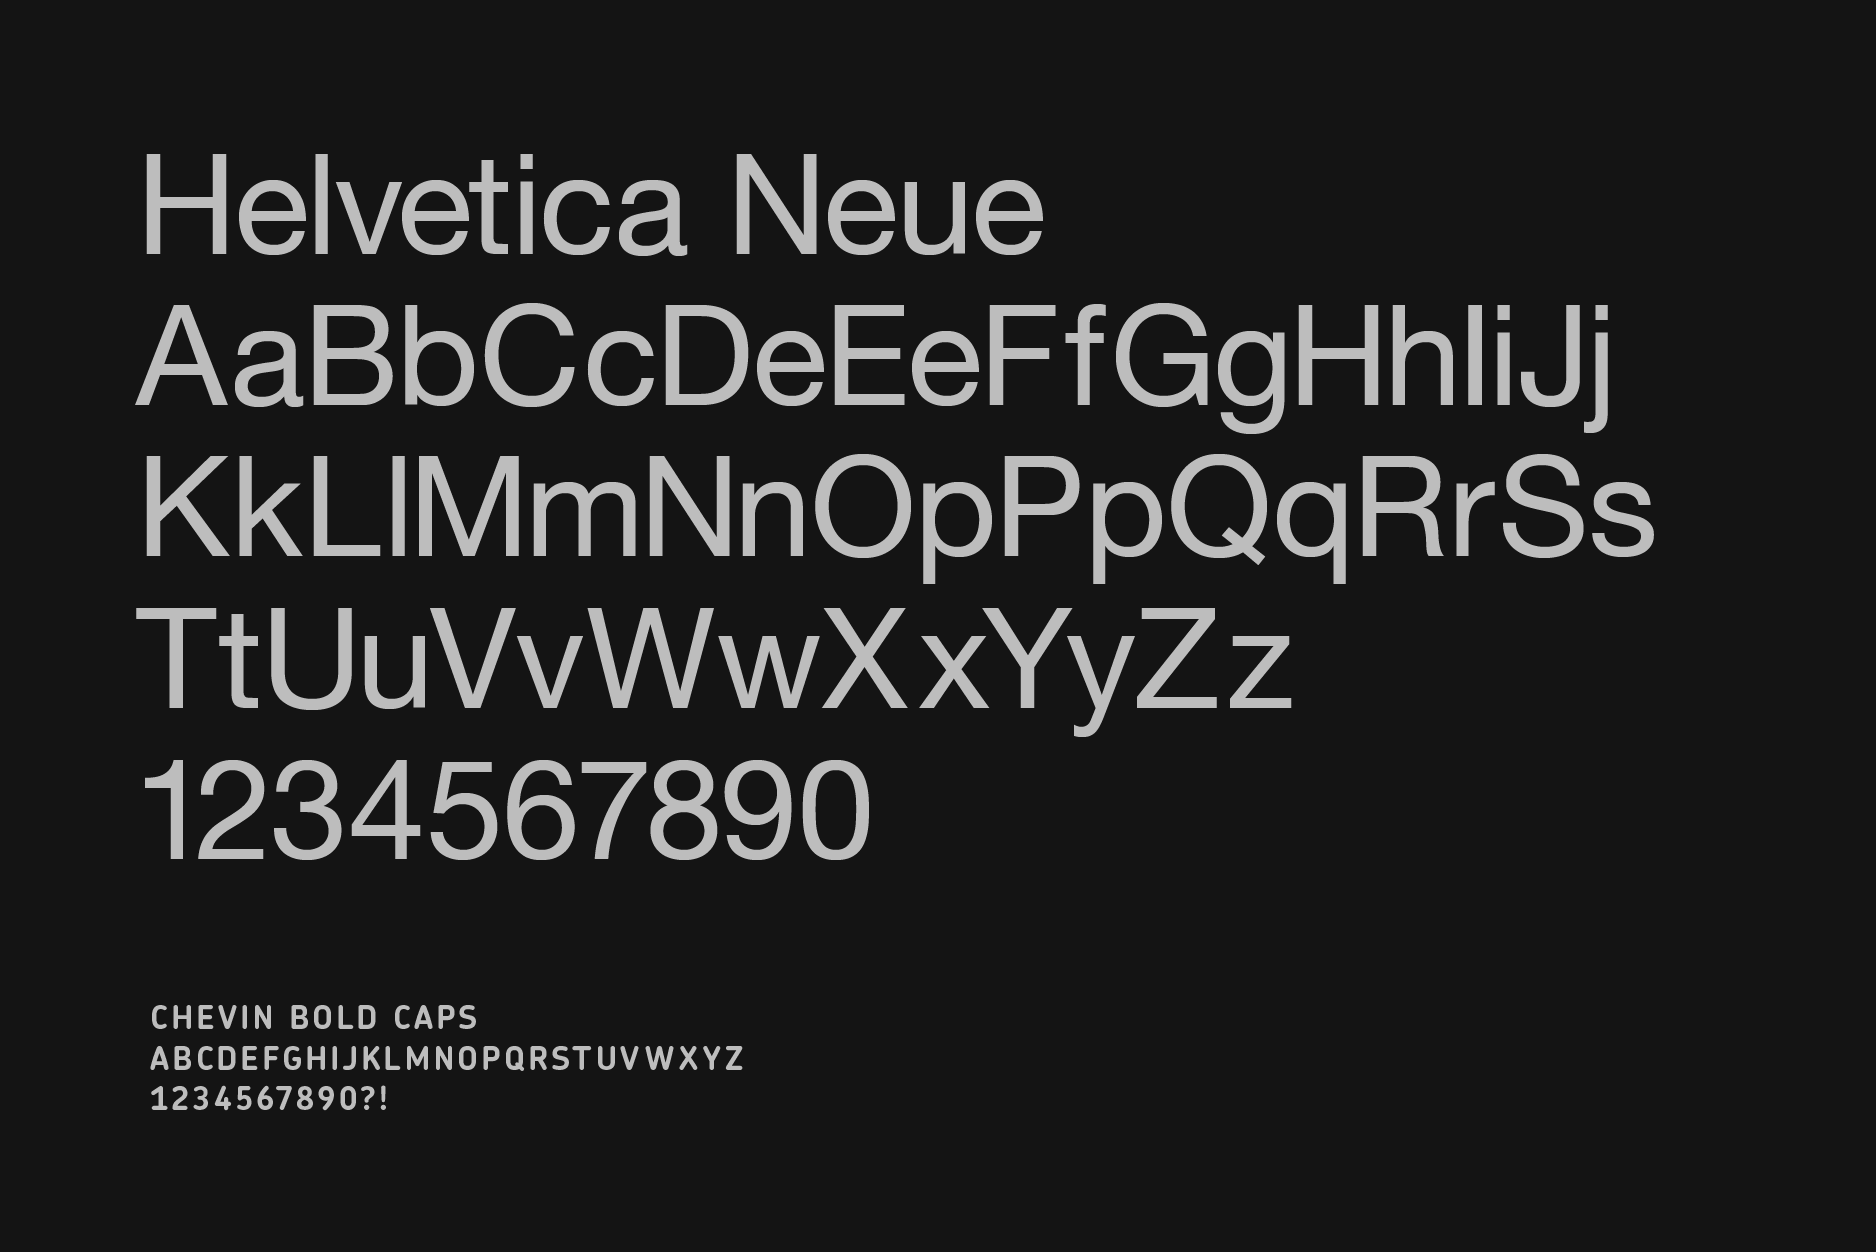 LeMessurier-branding-06-typography-3800